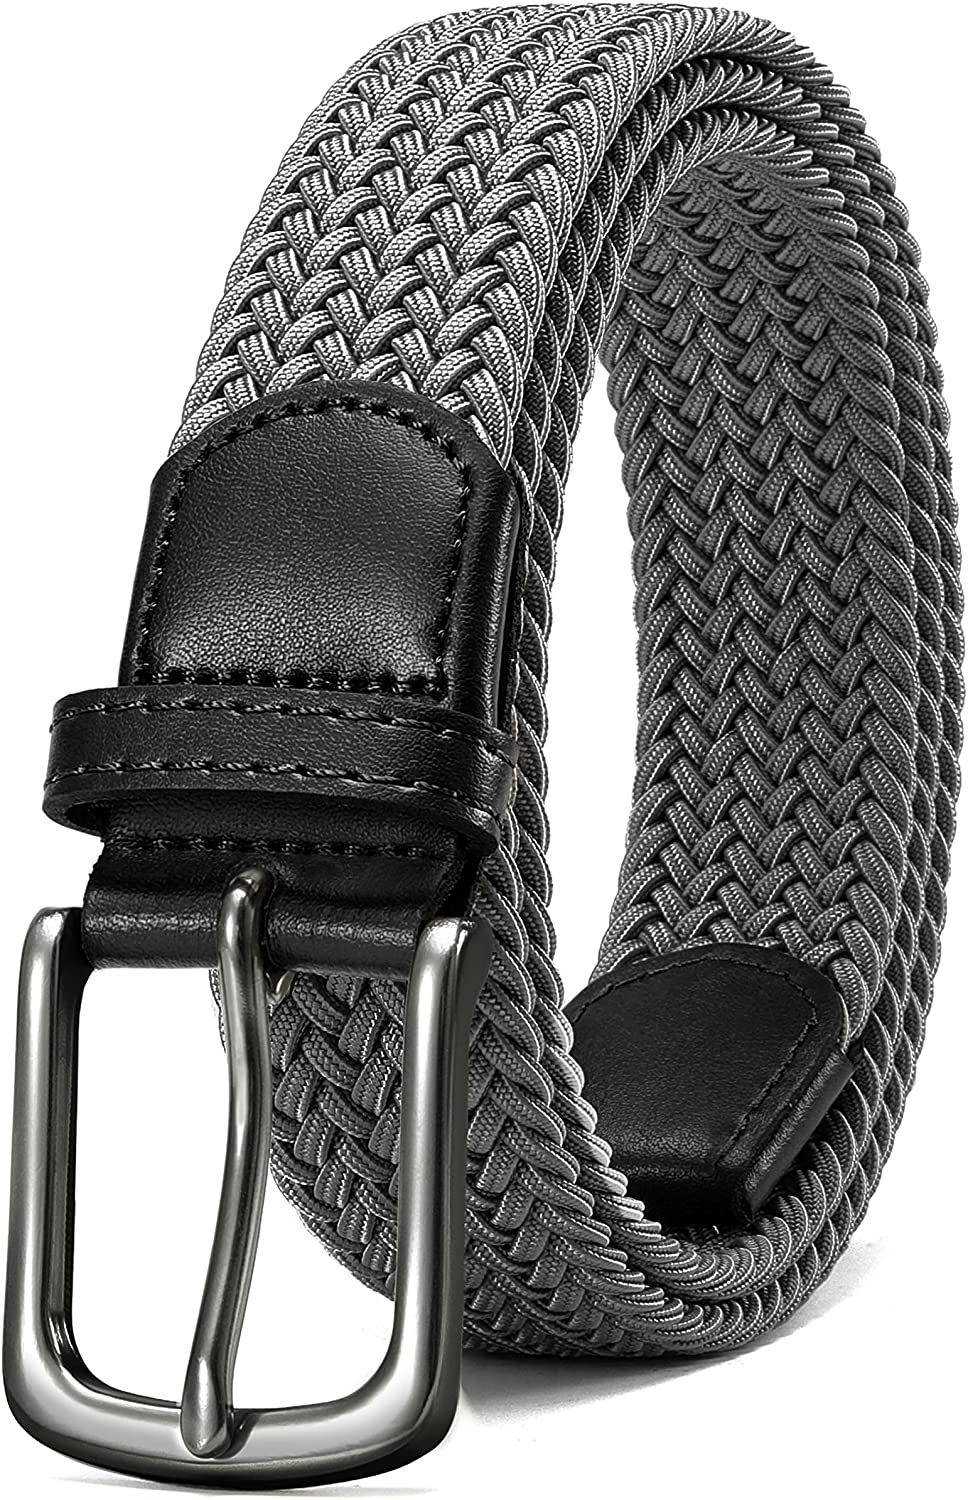 Nylon Ratchet Belt Comfort Adjustable Trim to Exact Fit Mens Belts Casual Width 1 3/8 Stretch Belts for Men Golf 